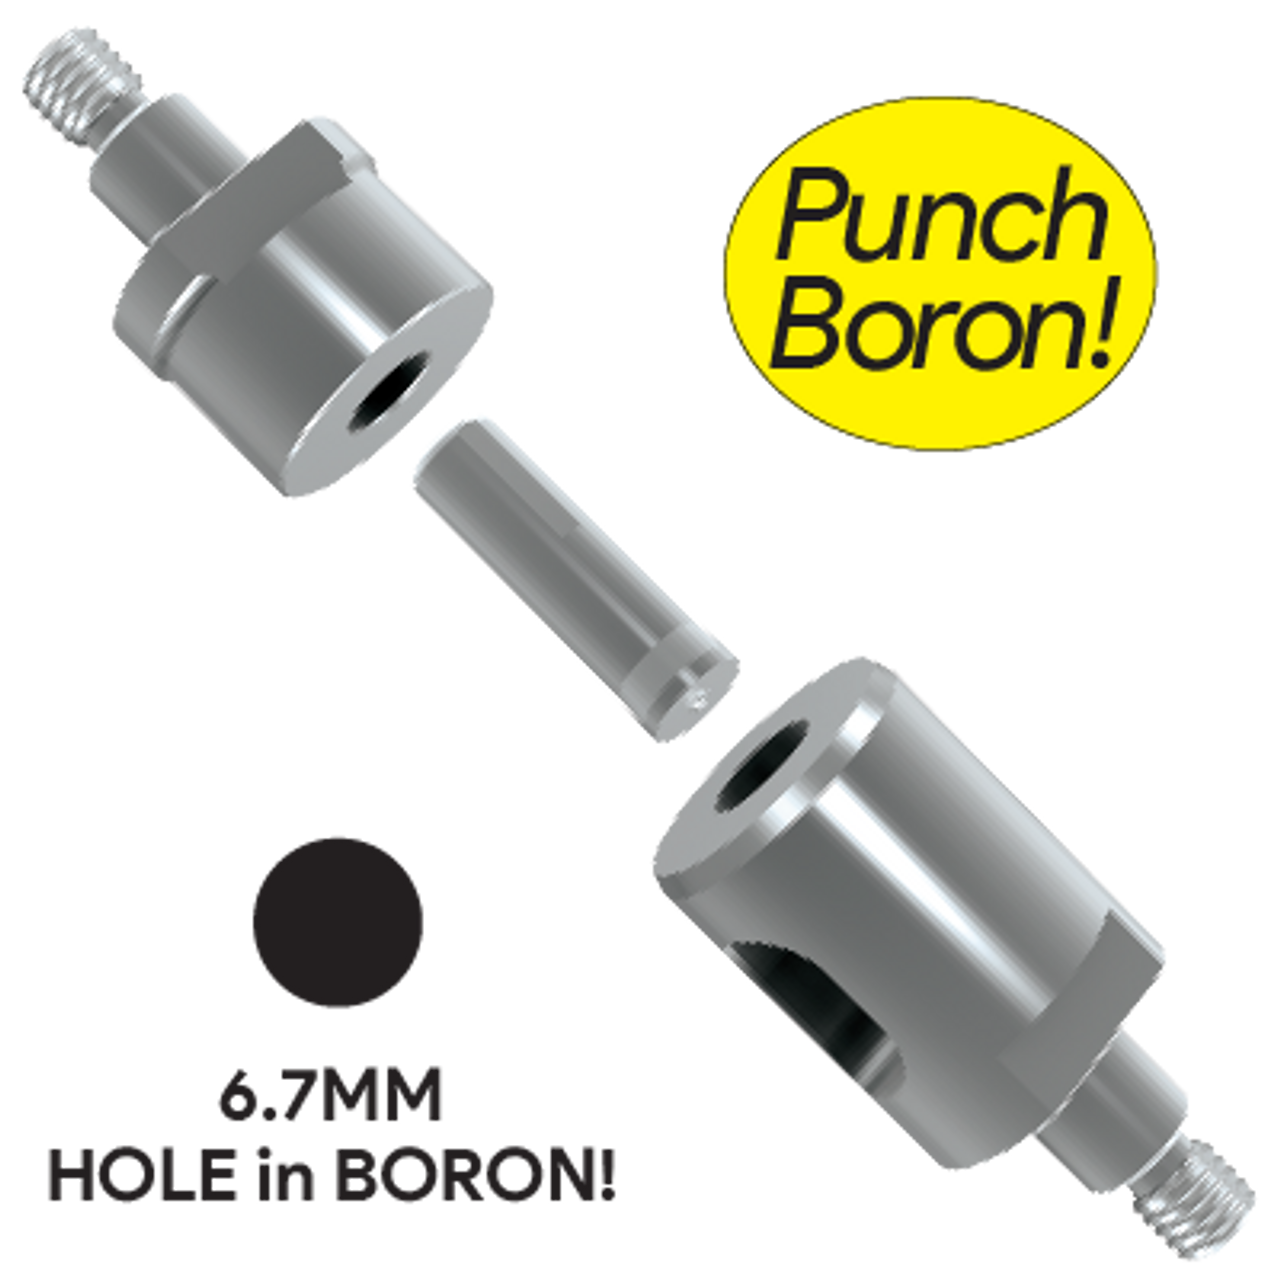 6.7MM Boron Punch for Dent Fix 10T Self-Piercing Riveter